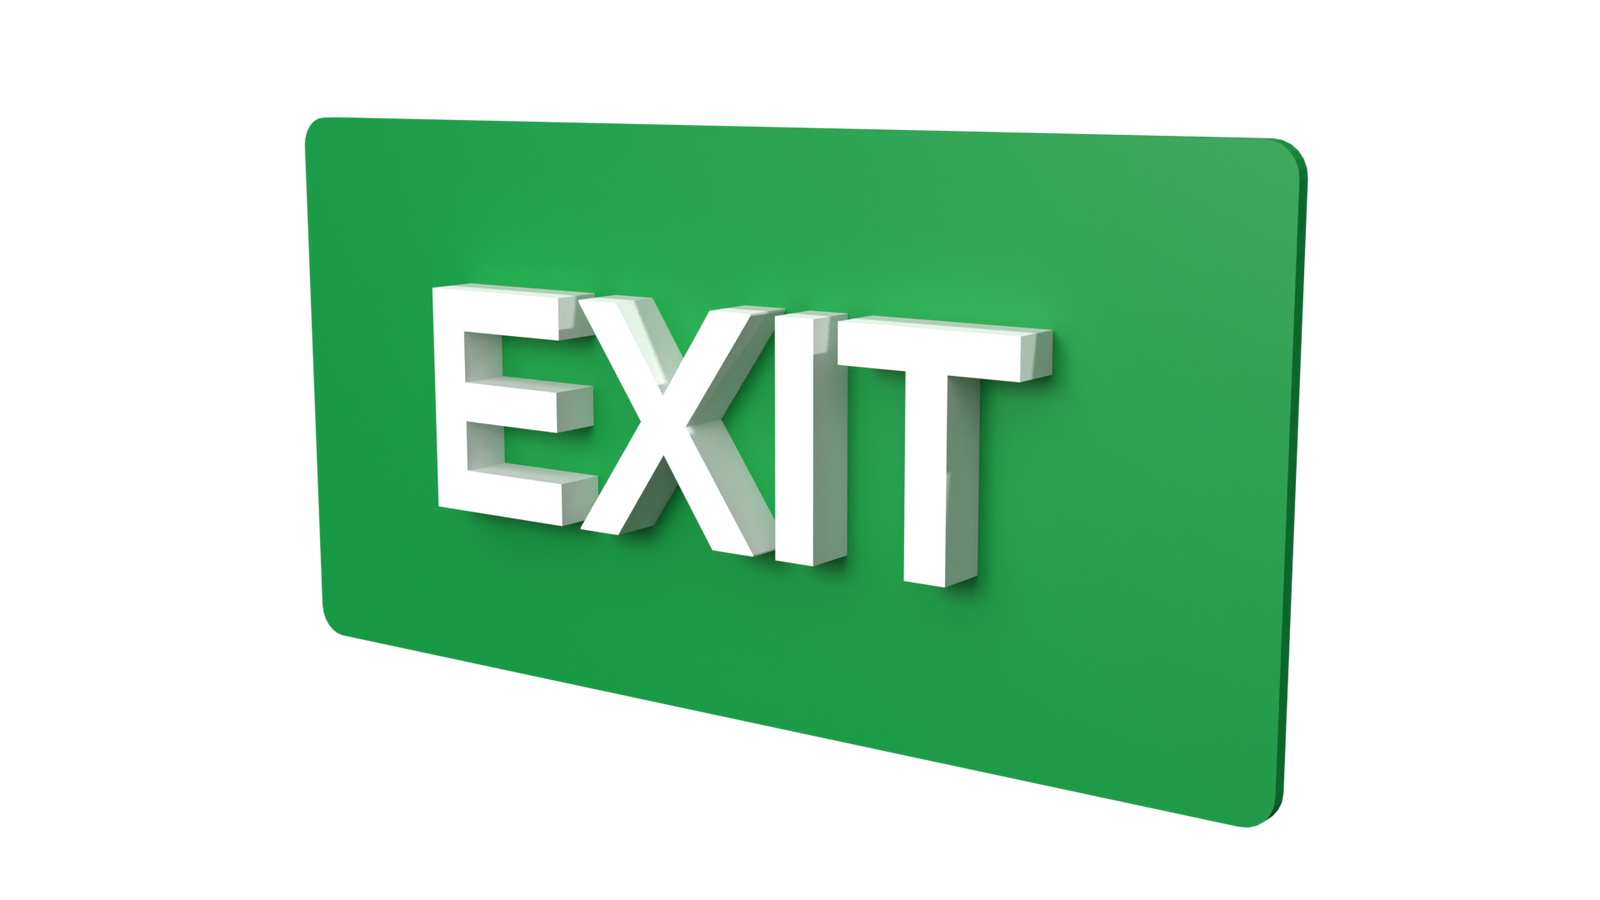 Exit | Exit Signage | Exit sign board